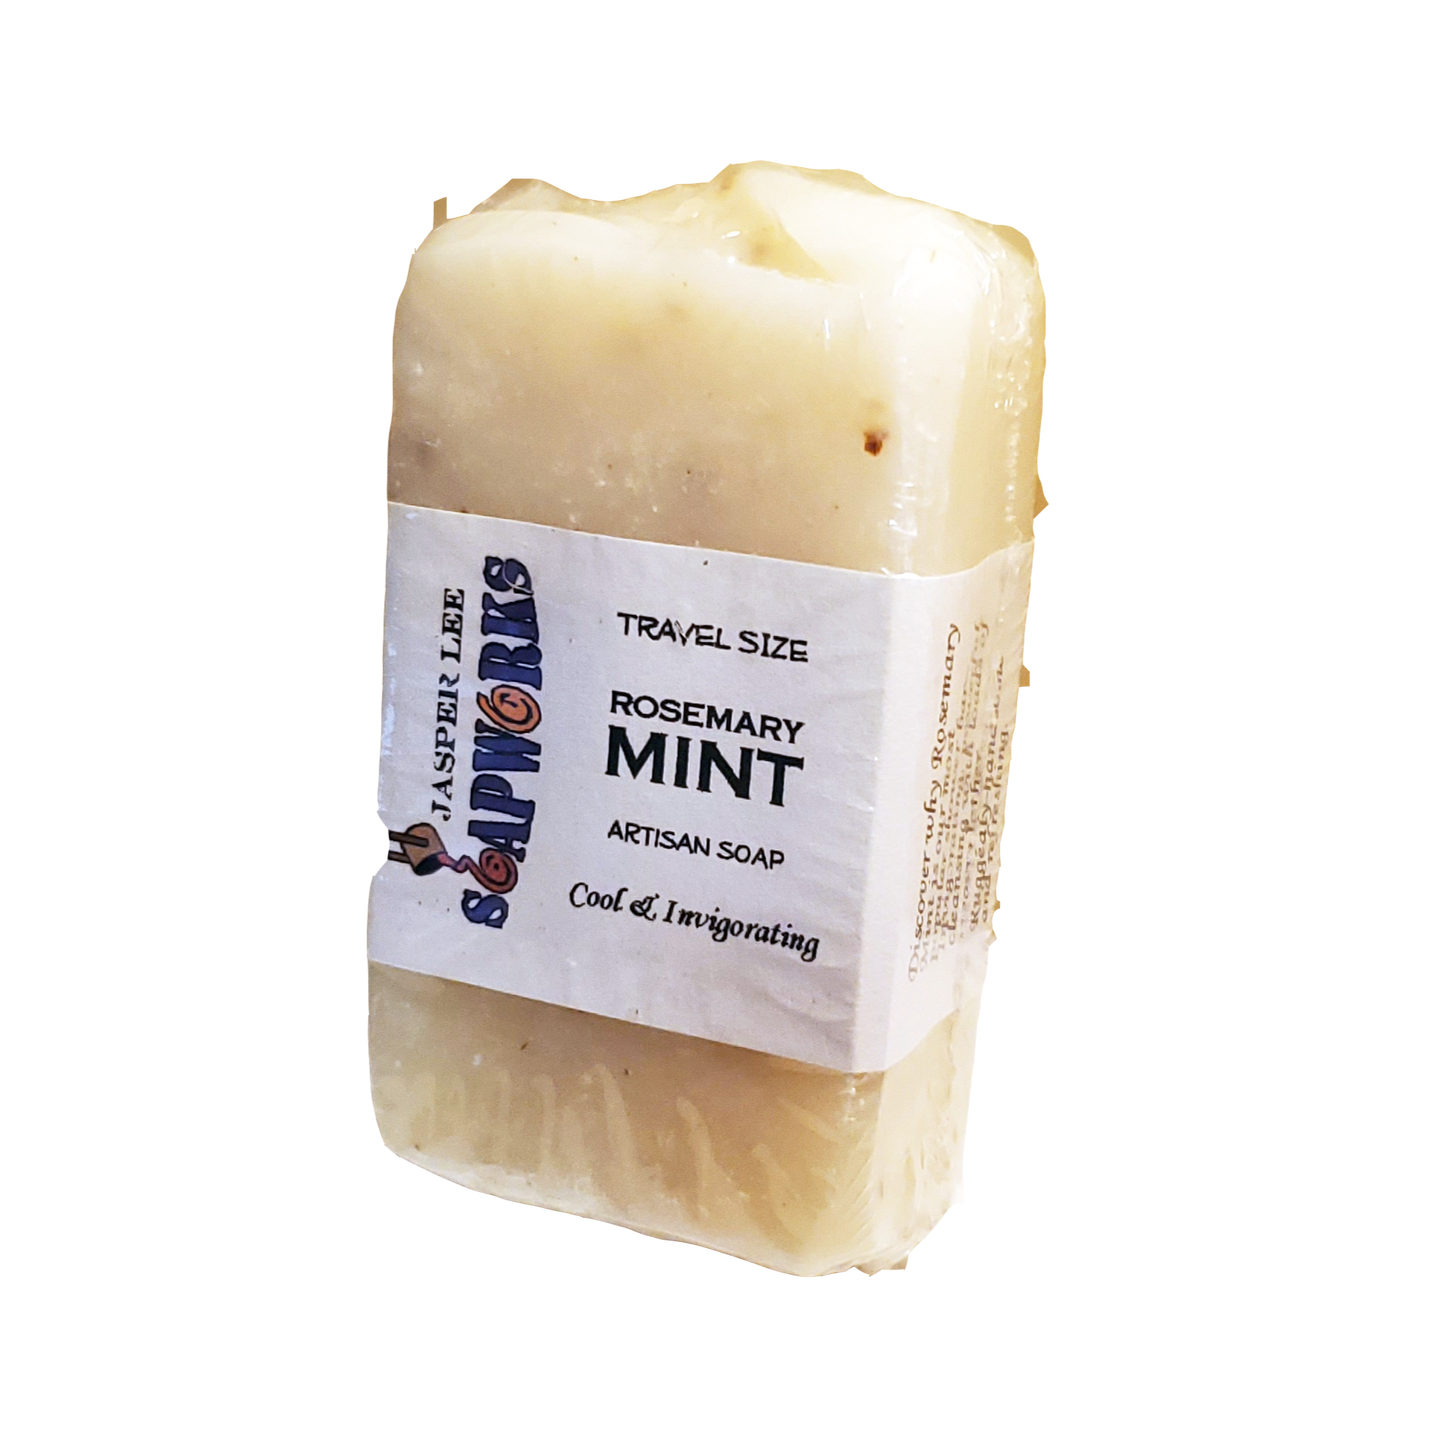 travel size bar of Rosemary Mint artisan soap